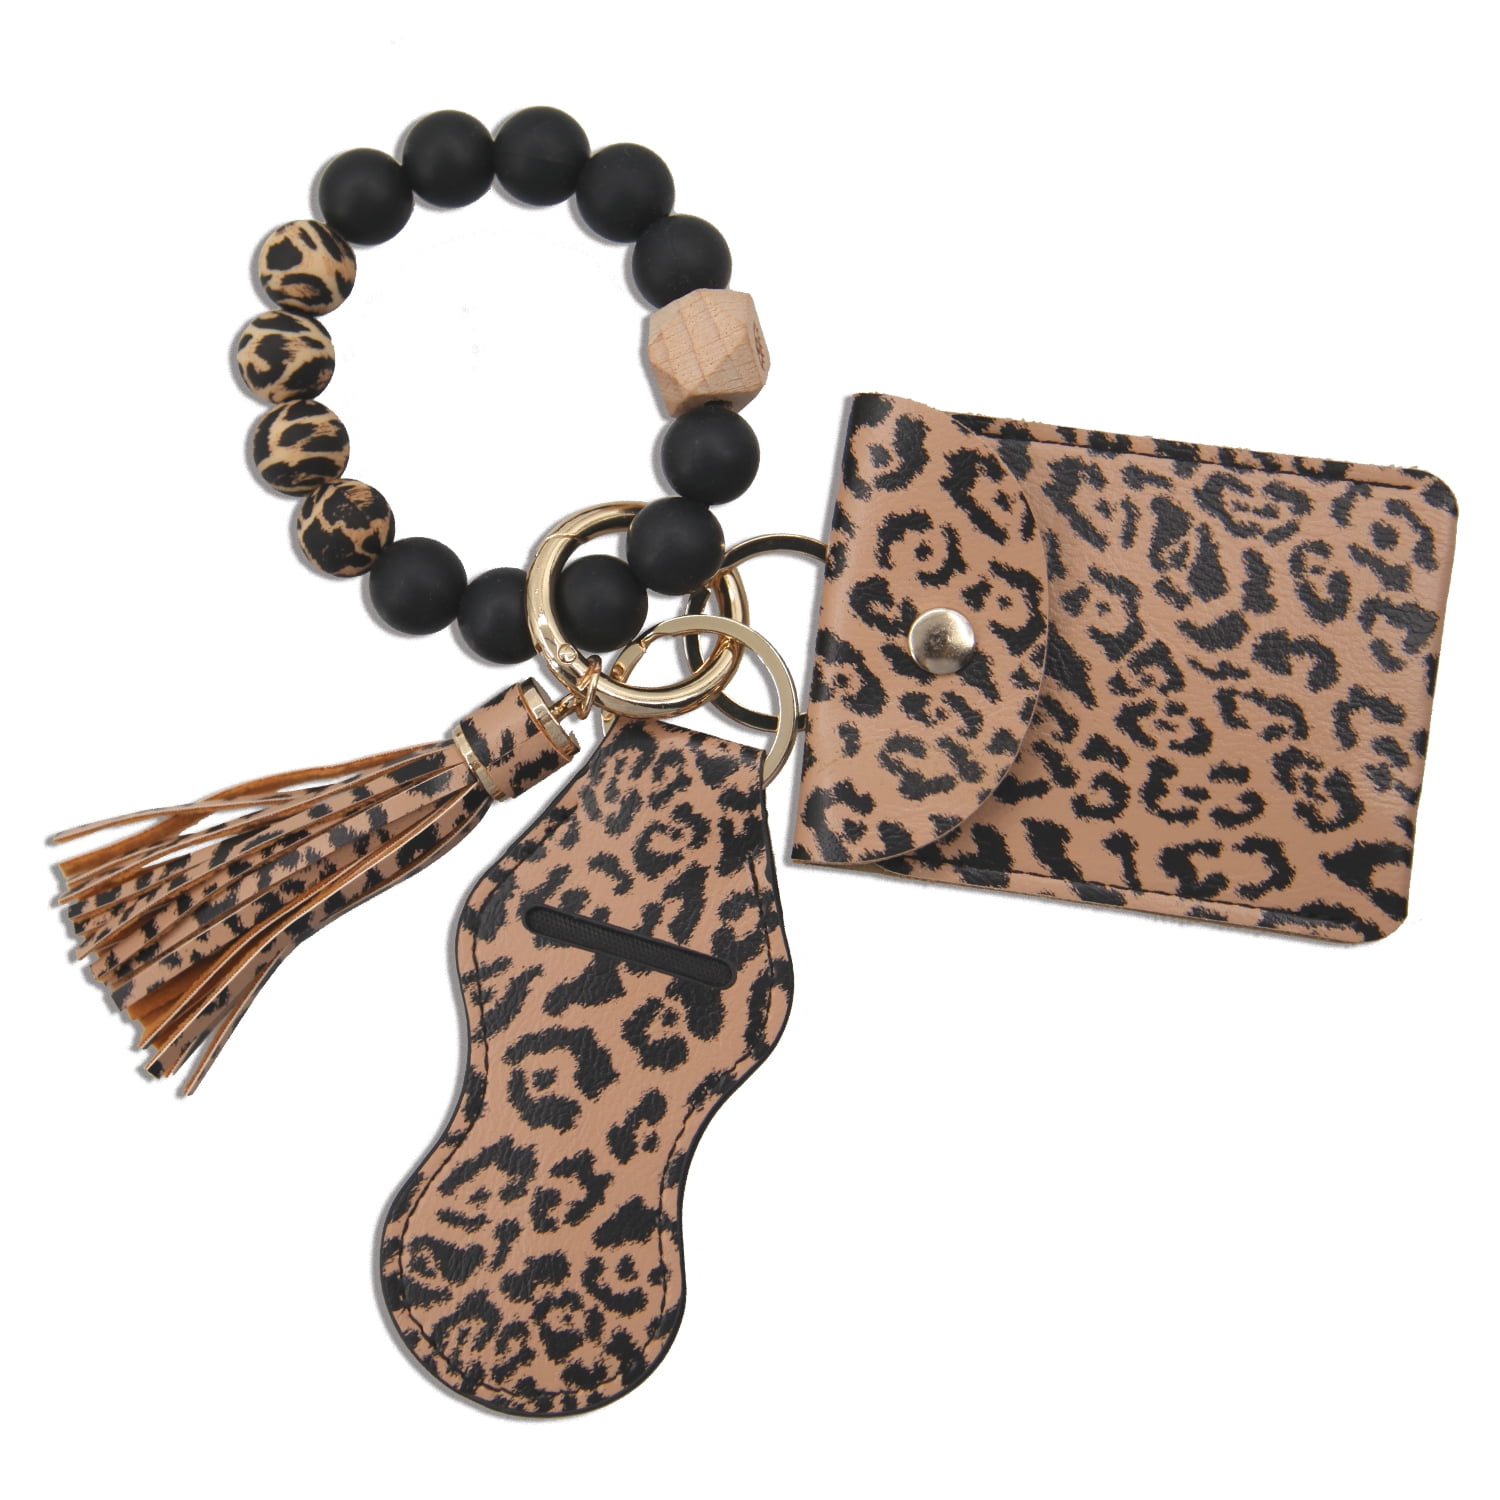 FIVWIN Wristlet Keychain Bracelet Wallet for Women Silicone Beaded Car Key Rings with Tassel Bangle Card Holder